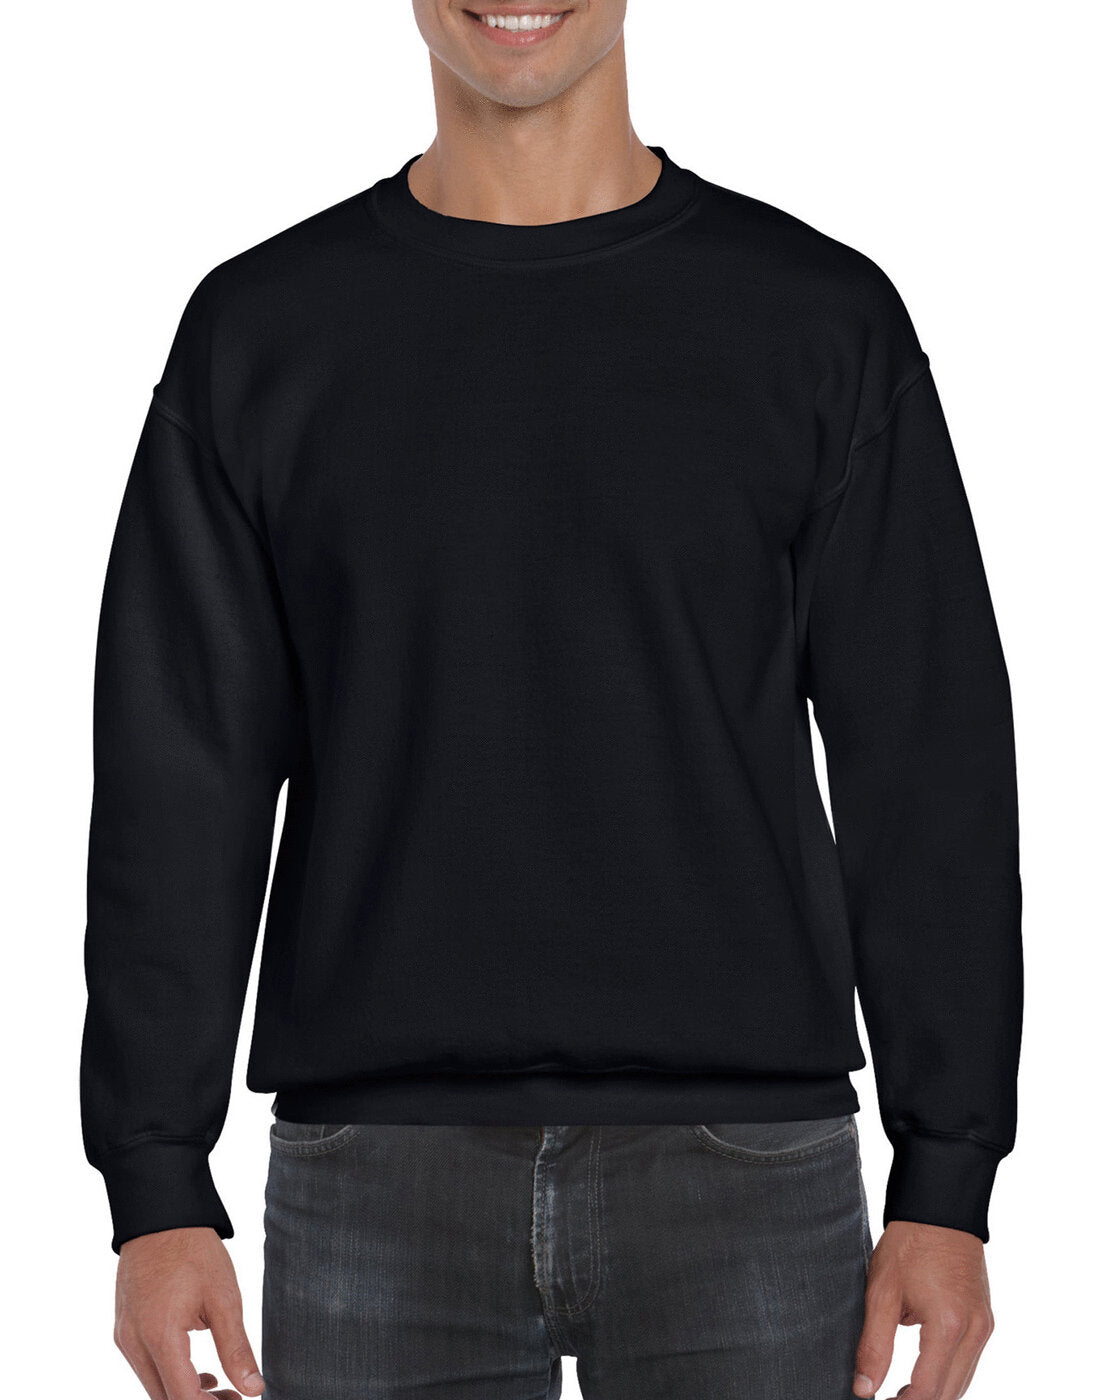 Gildan Dryblend Adult Crew Neck Sweatshirt - Black